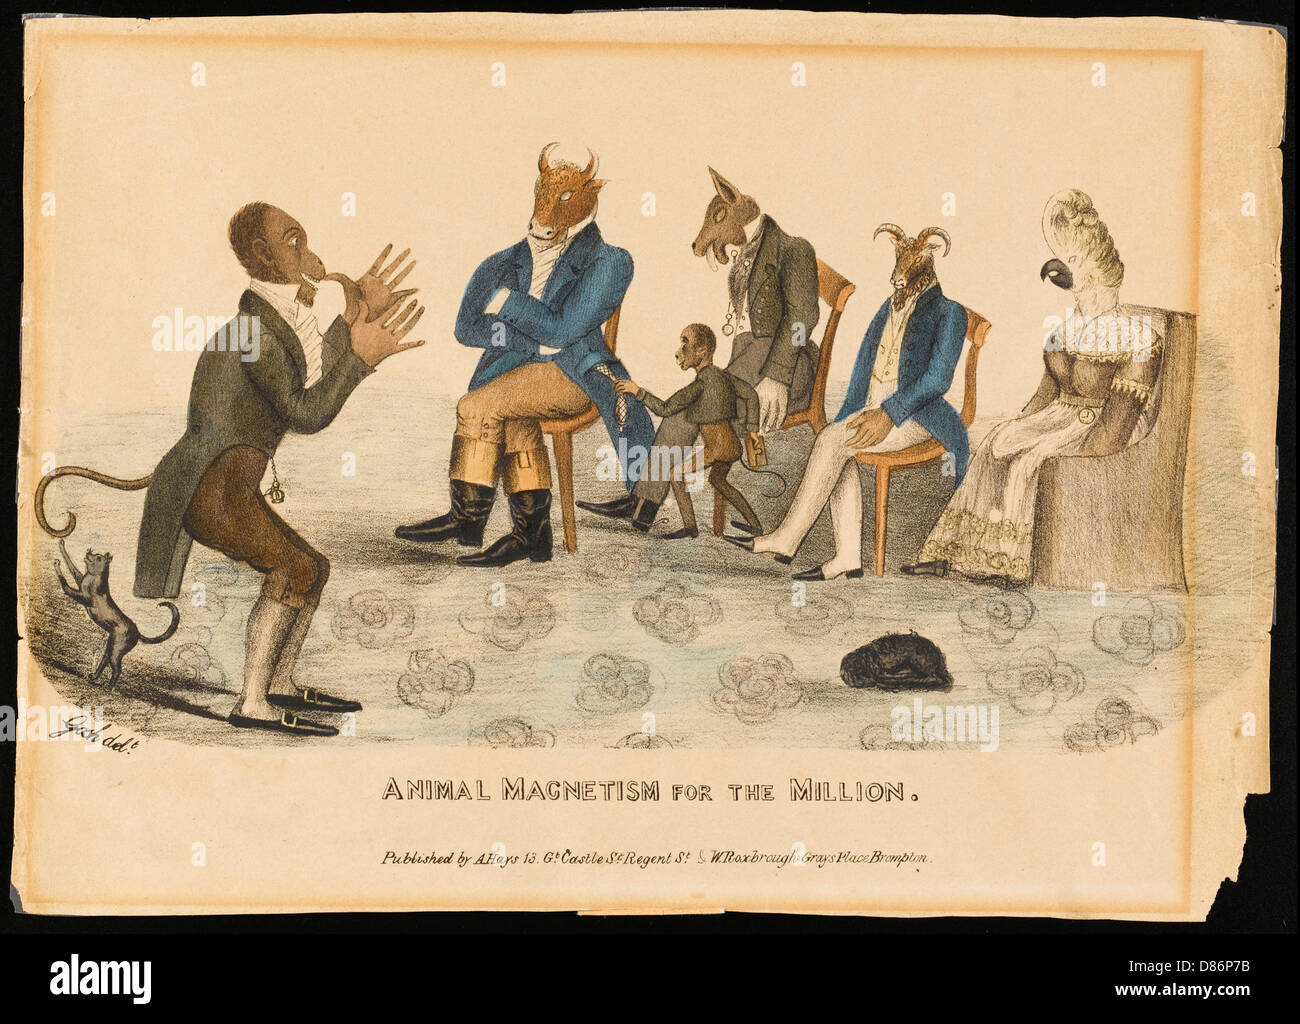 Animal magnetism satire, c. 1830. Stock Photo